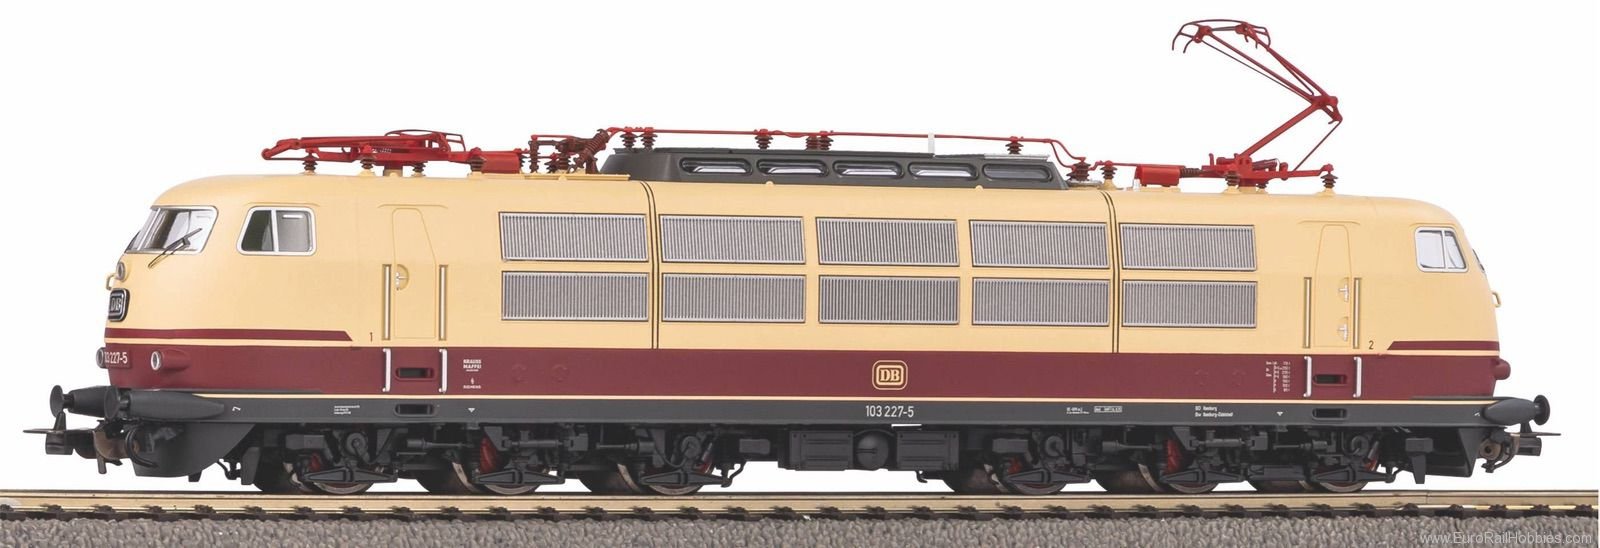 Piko 51688 Electric Locomotive BR 103 DB IV (Marklin AC 